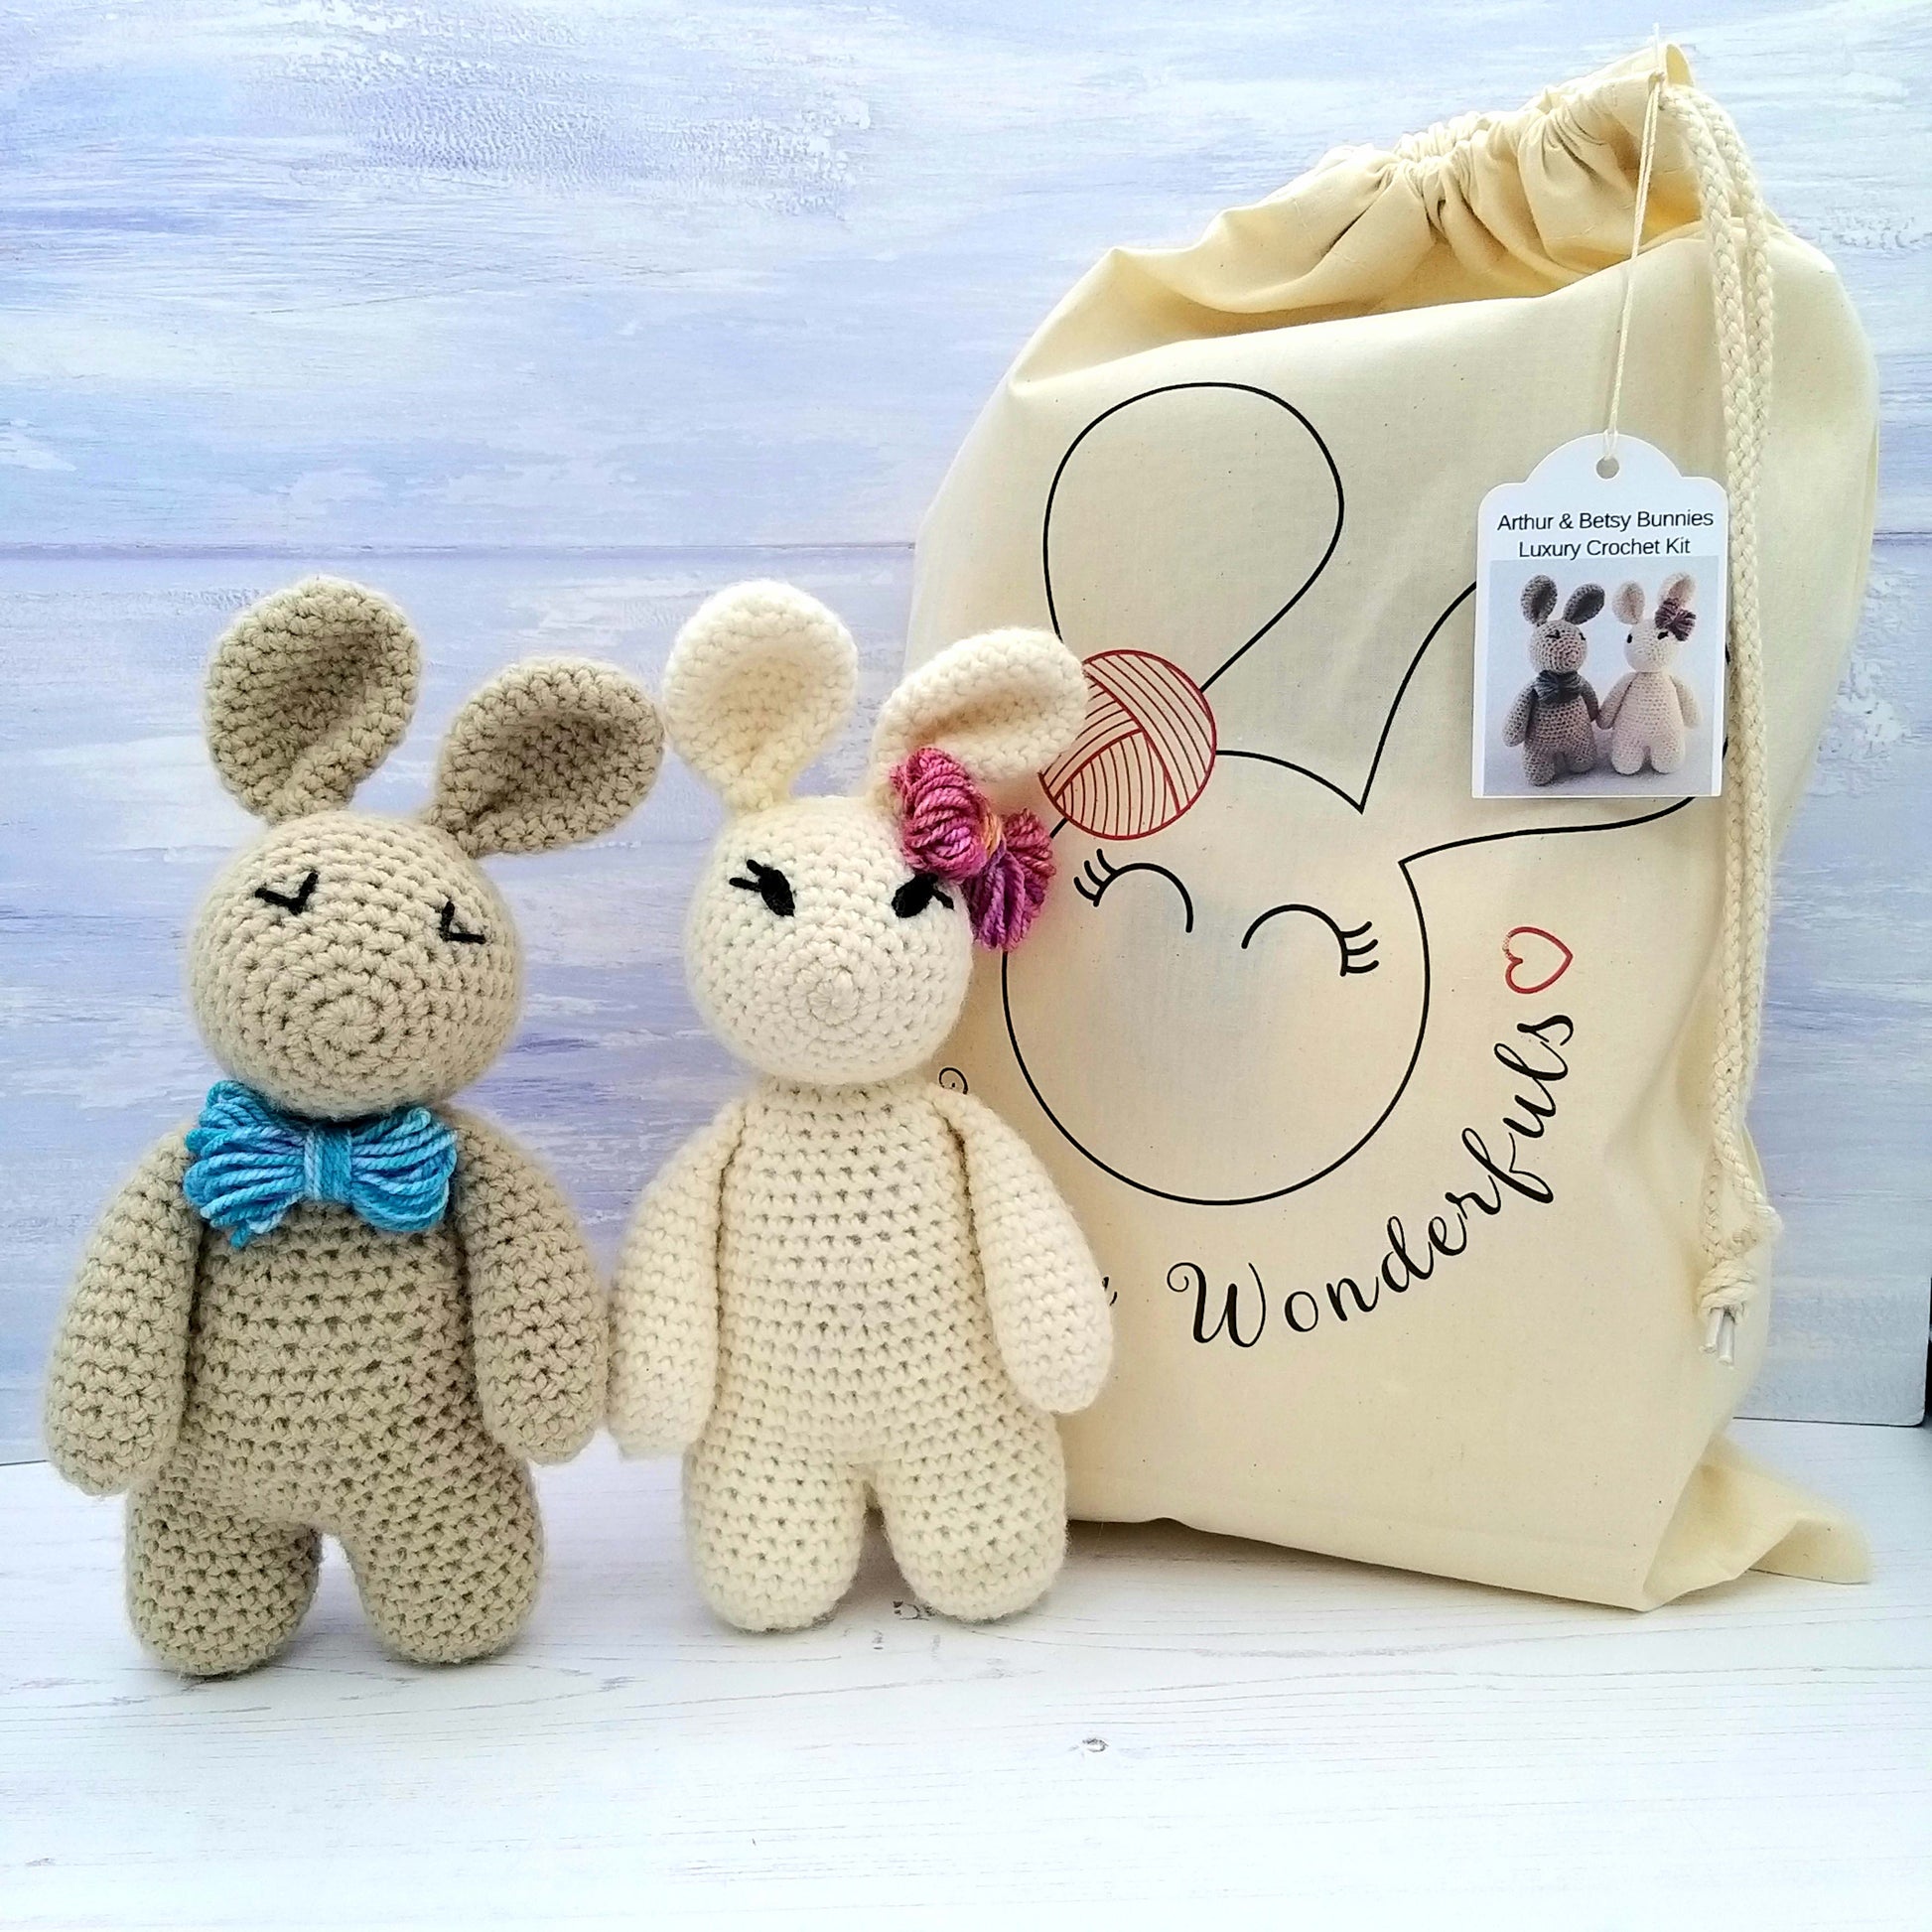 Toy Rabbit Crochet Kit for Beginners - Arthur & Bestsy Bunnies